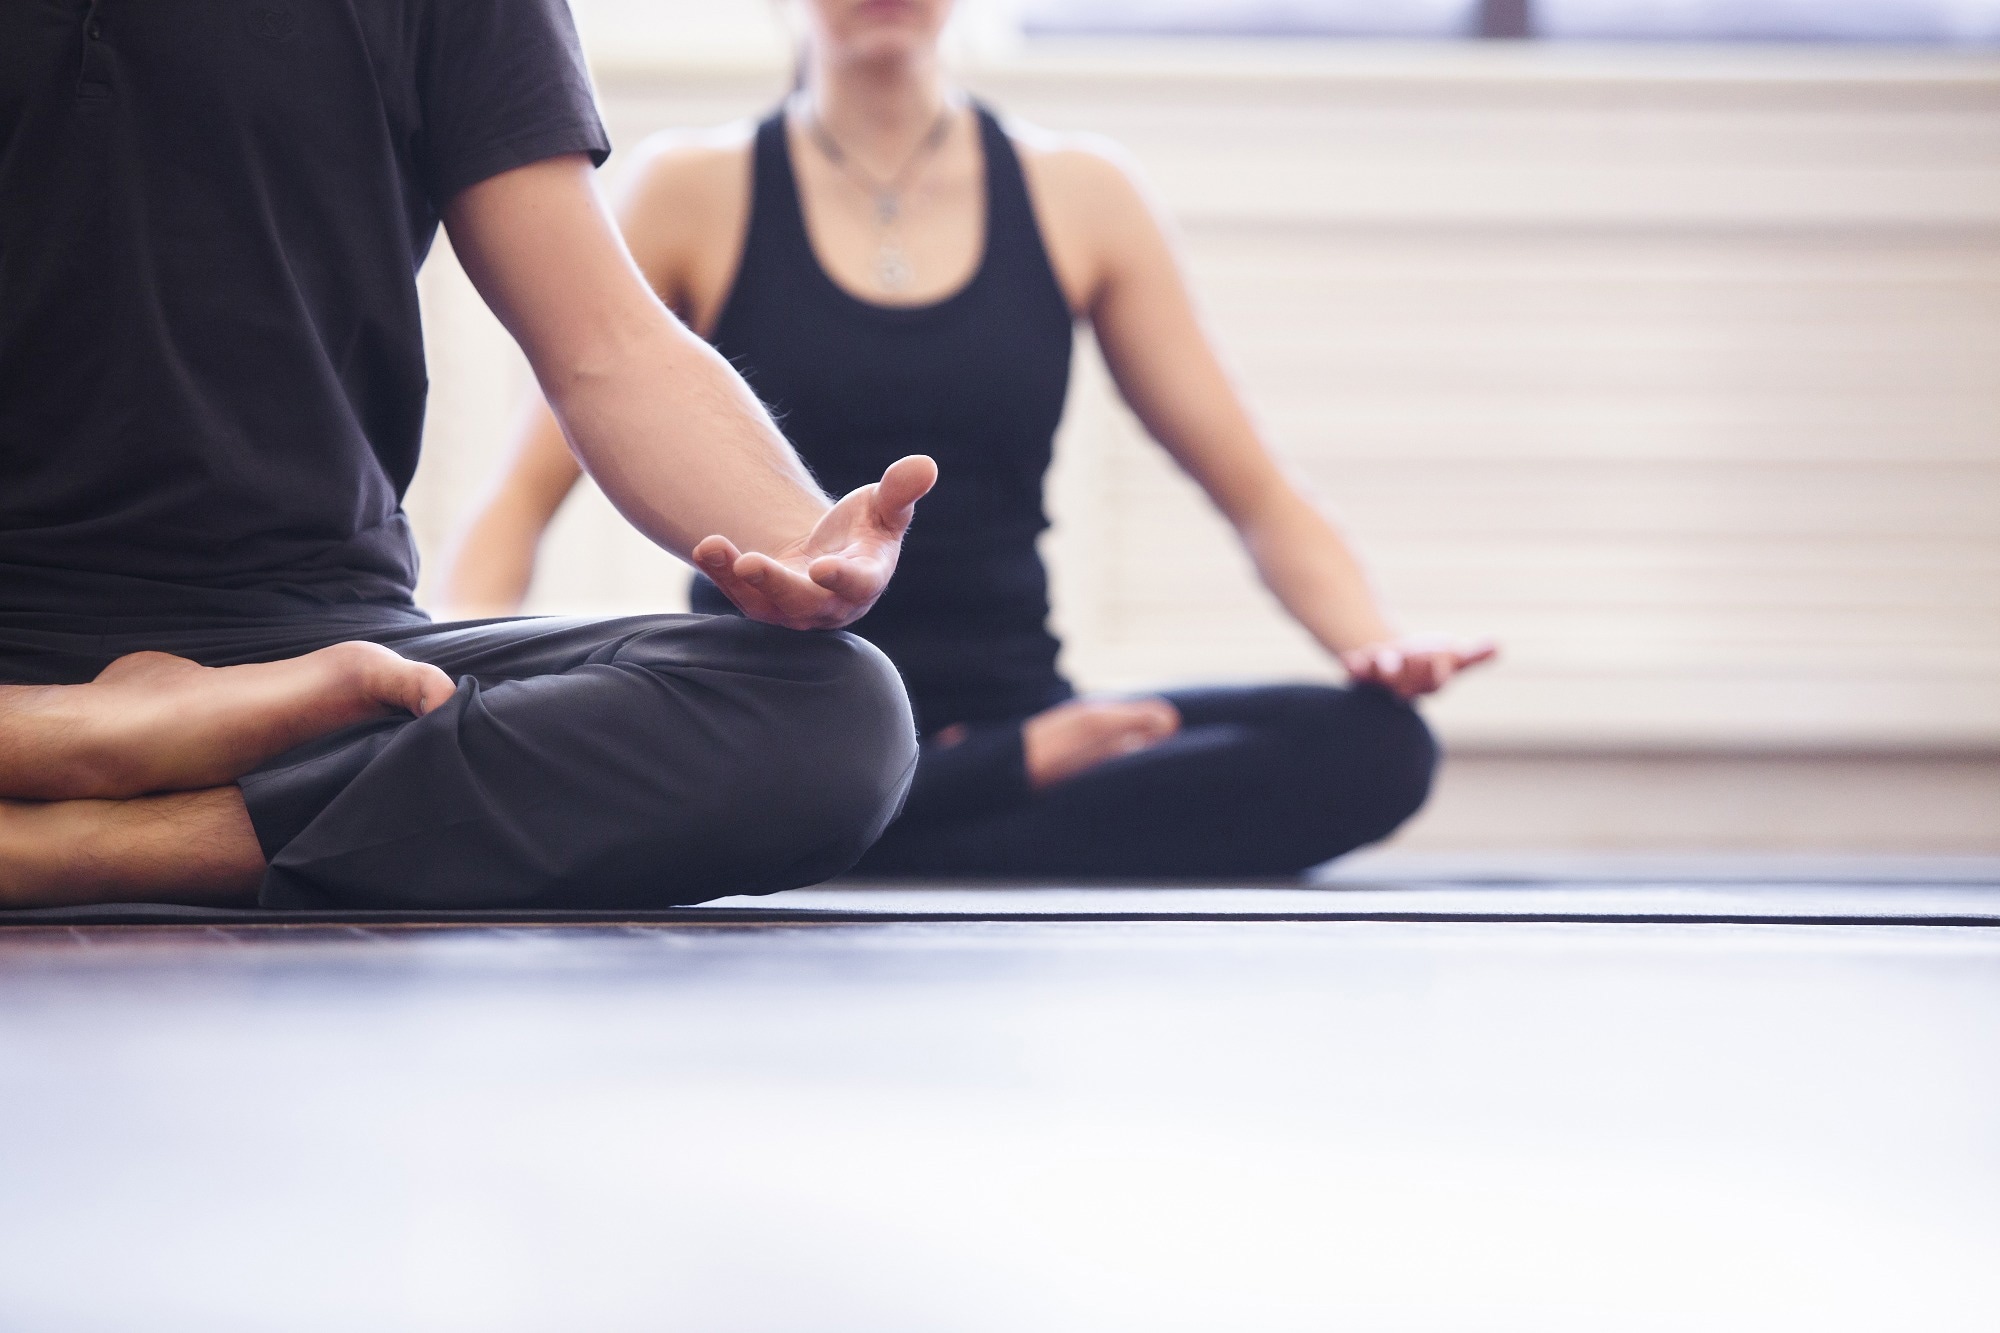 Study: Sudarshan Kriya Yoga Breathing and a Meditation Program for Burnout Among Physicians. Image Credit: ZephyrMedia/Shutterstock.com